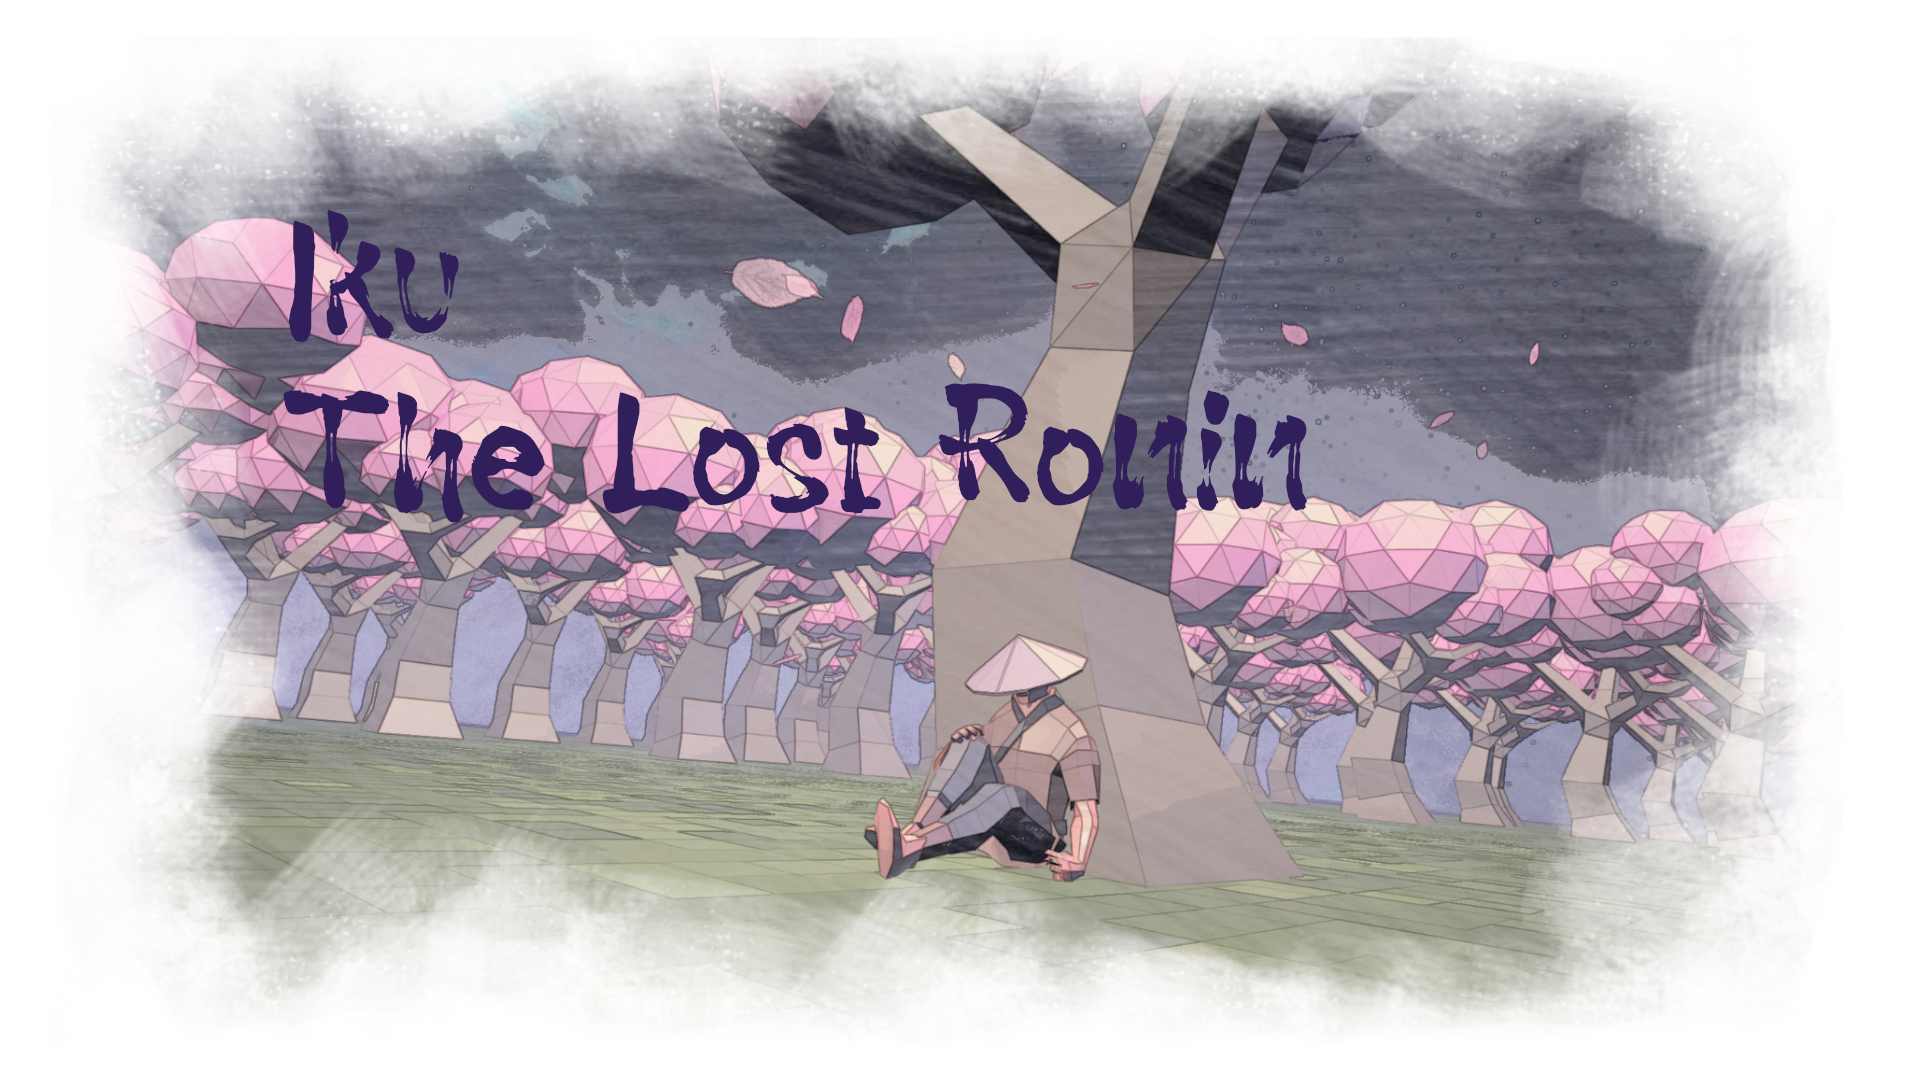 Iku: The Lost Ronin